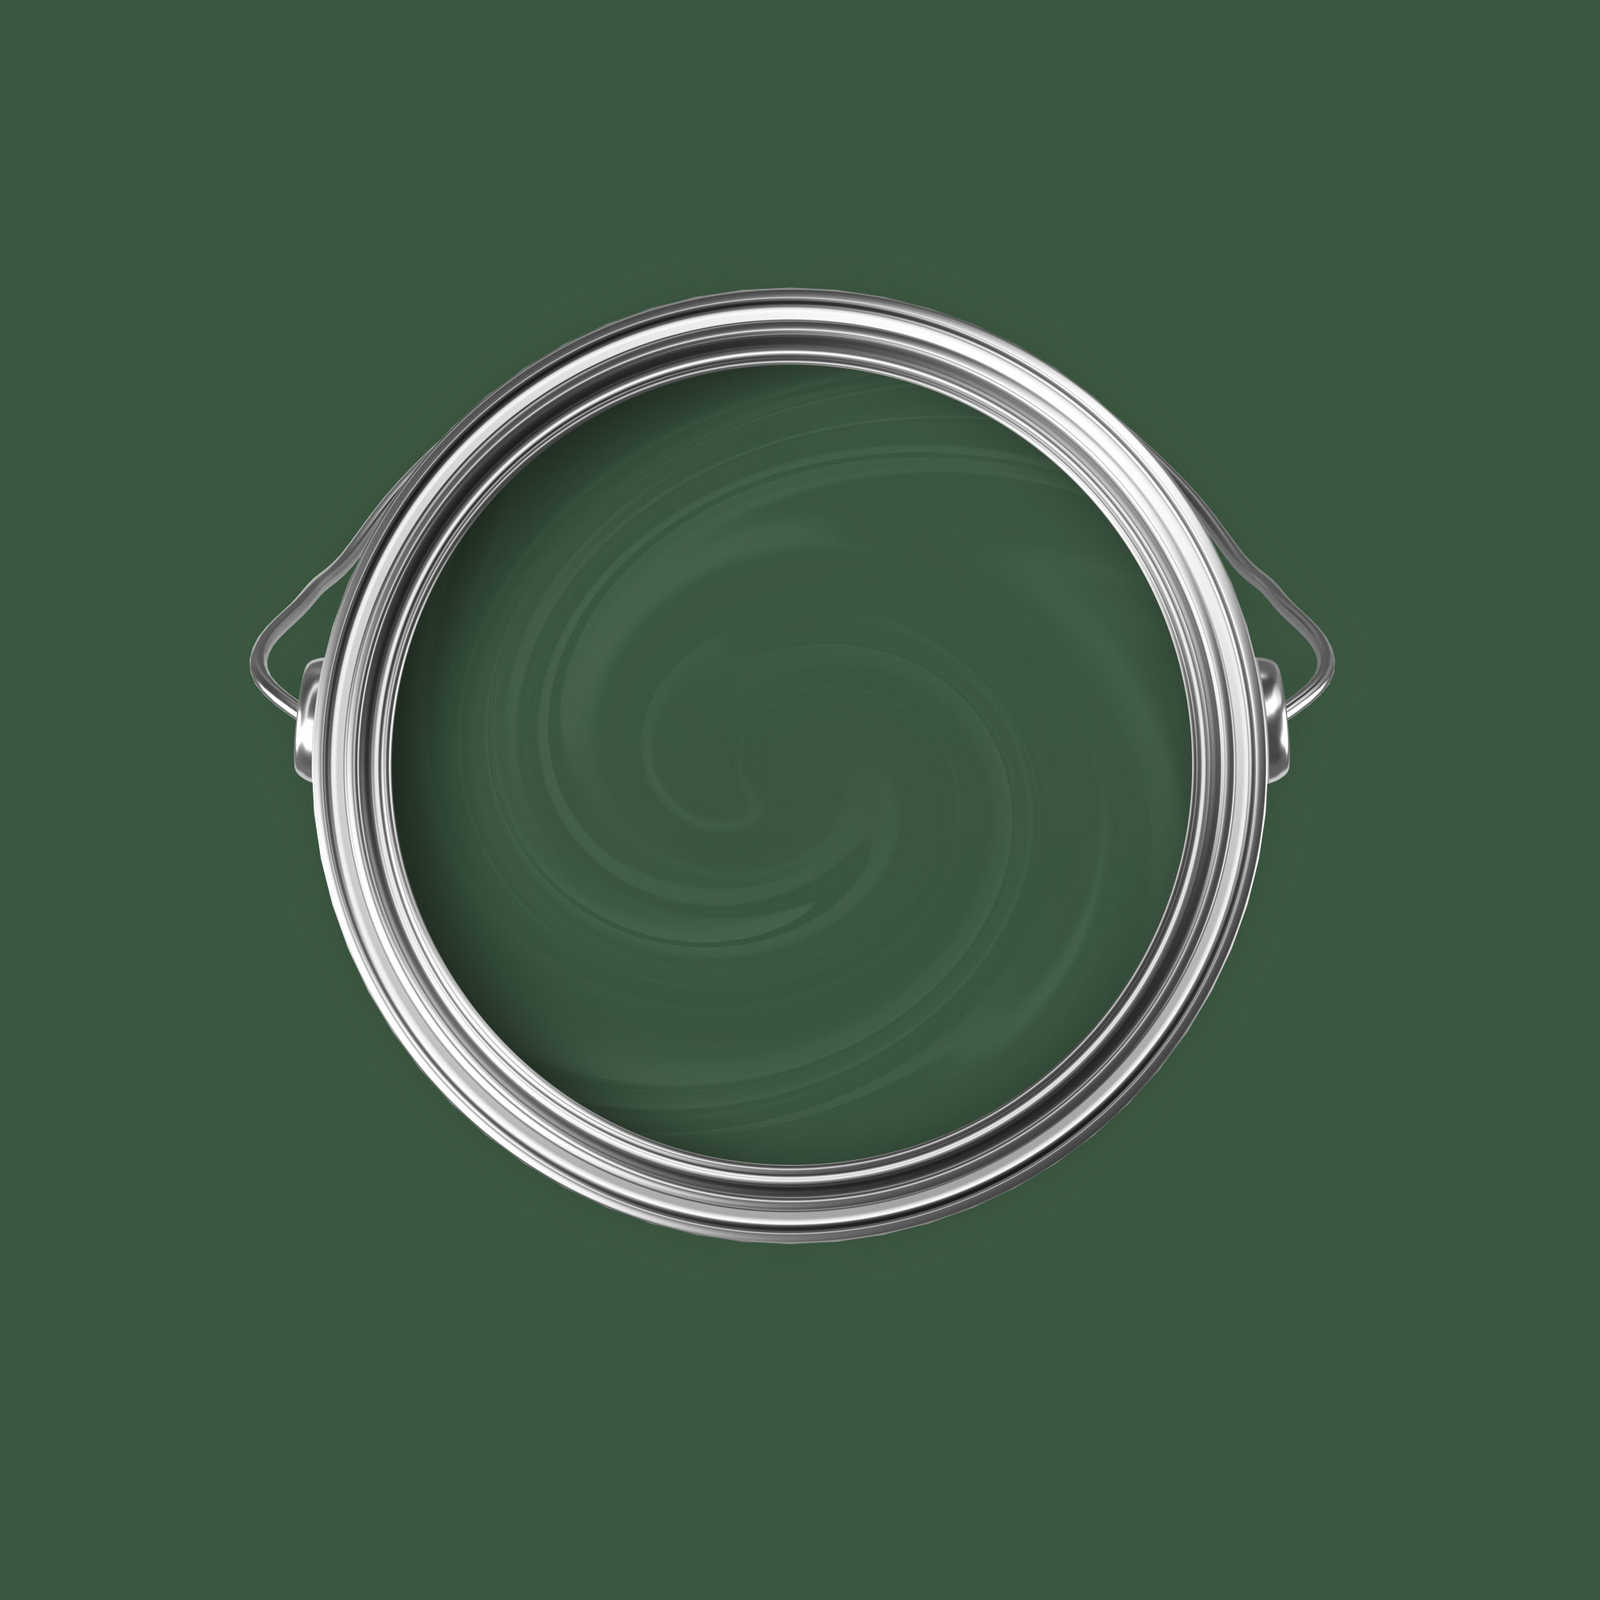             Pittura murale Premium Verde muschio »Gorgeous Green« NW505 – 5 litri
        